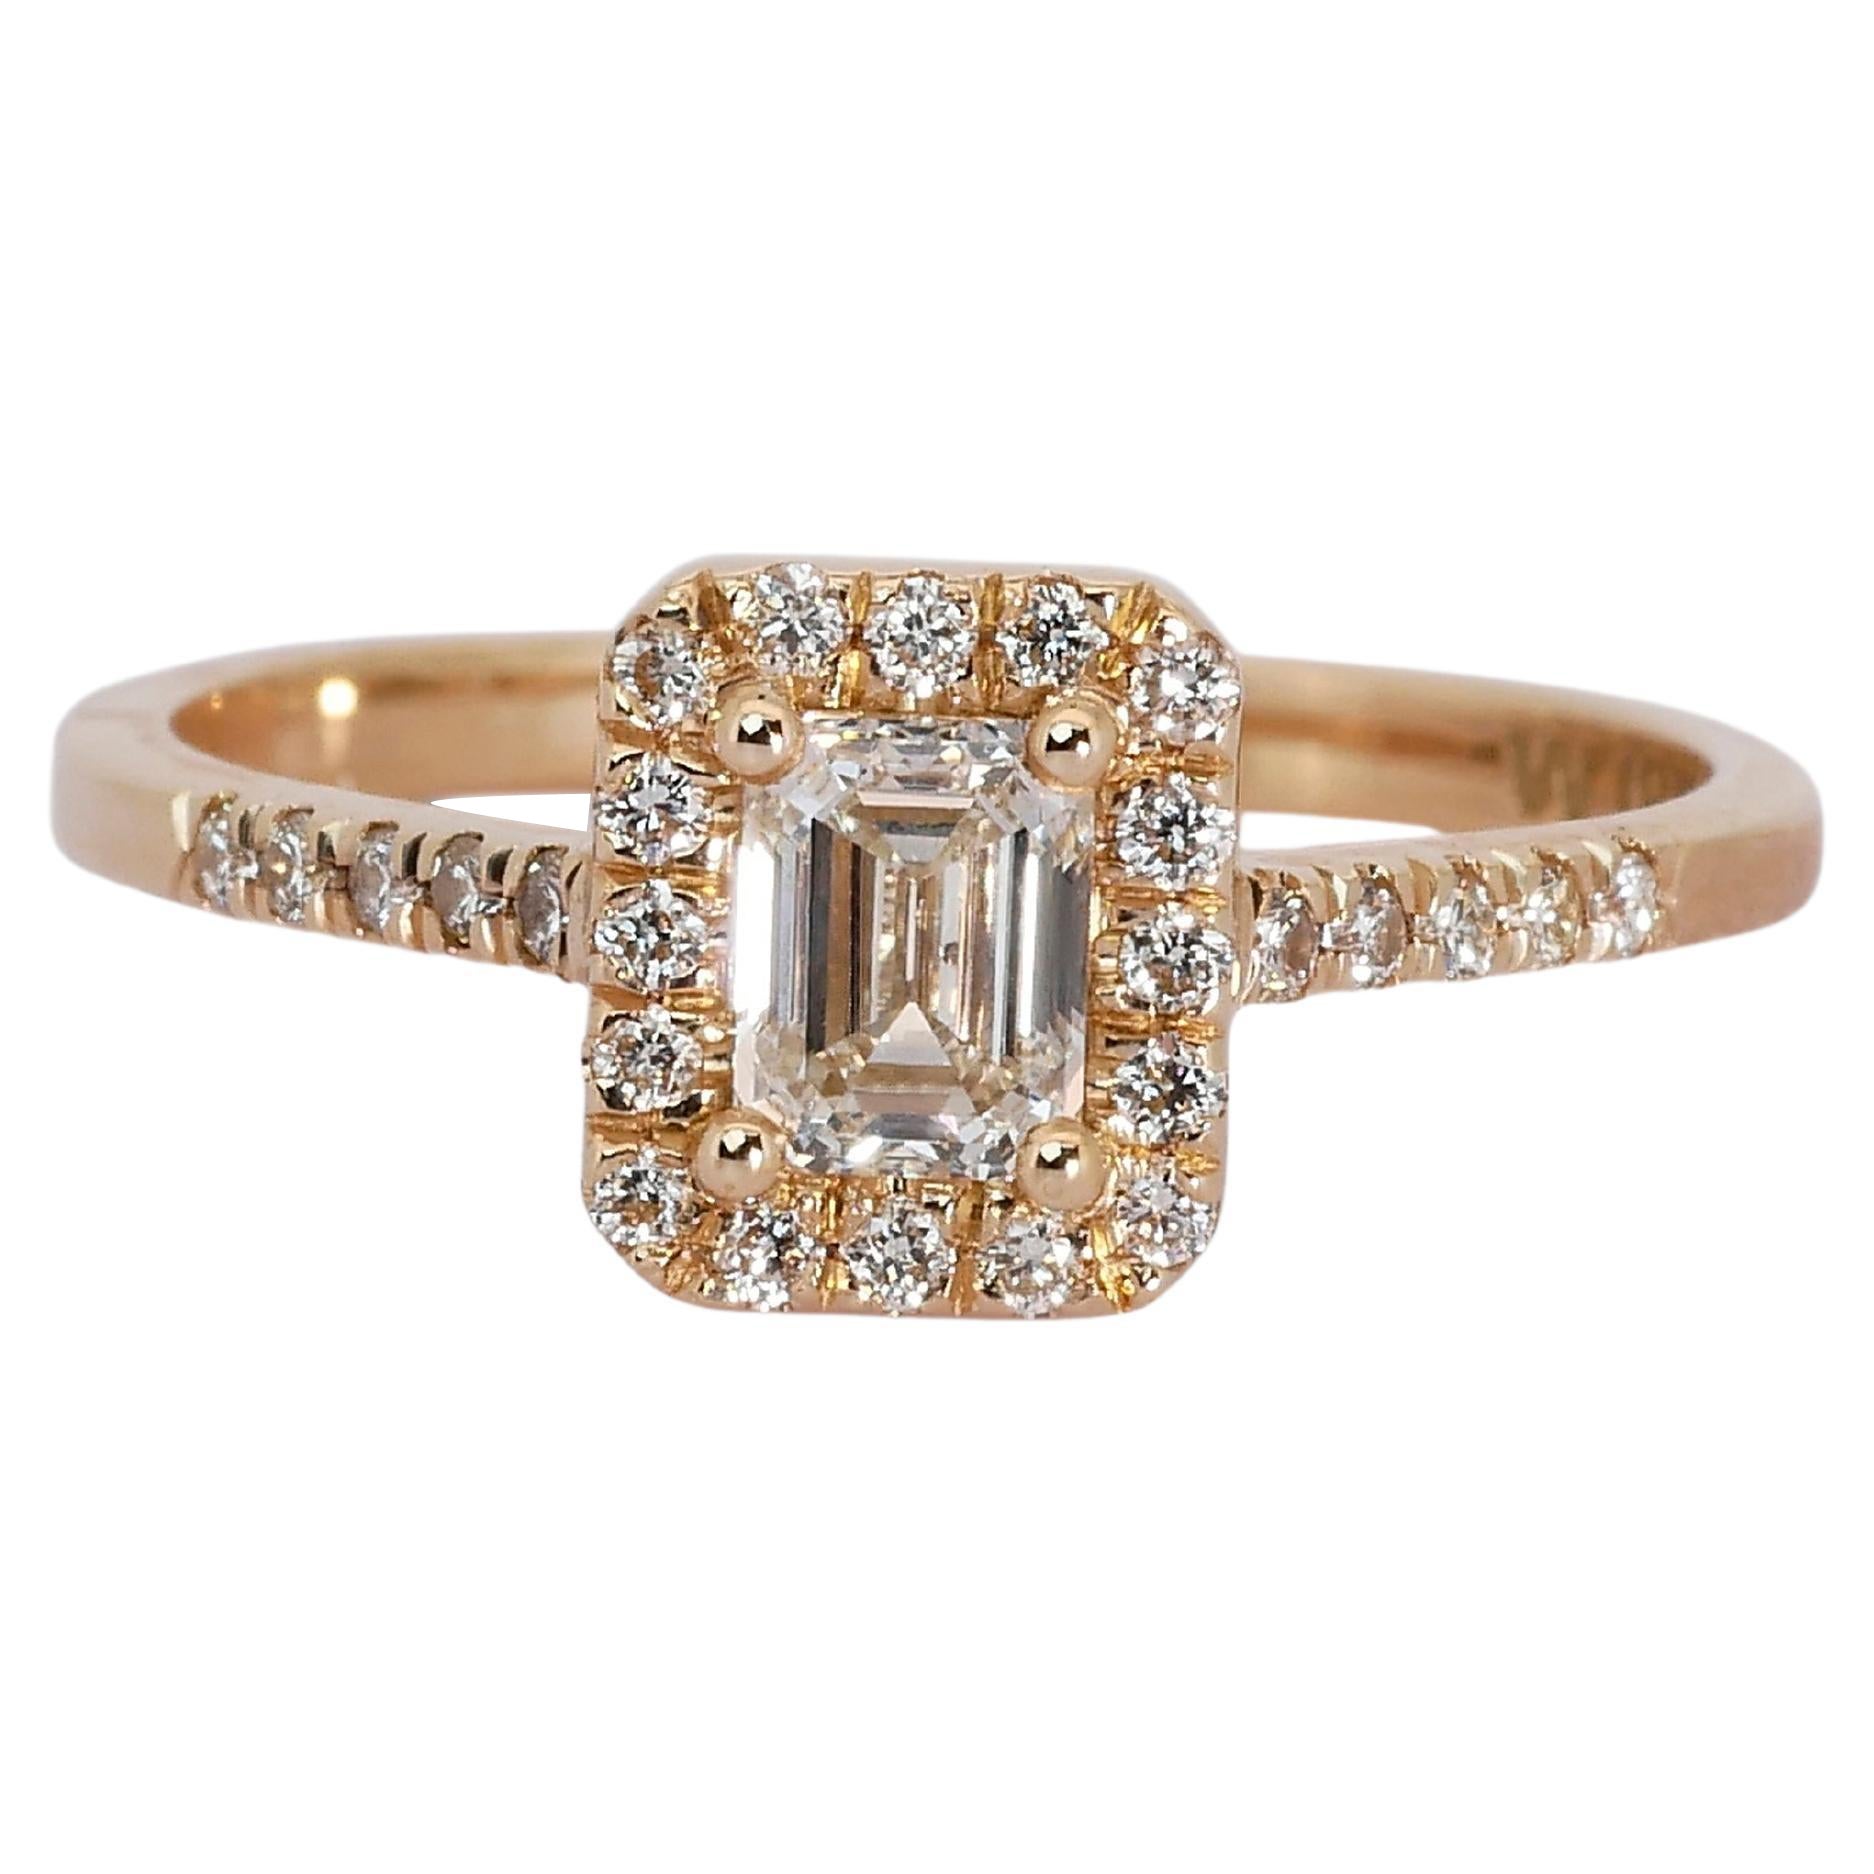 Ravissante bague en or rose 18 carats avec halo de diamants naturels de 0,84 carat certifiés IGI